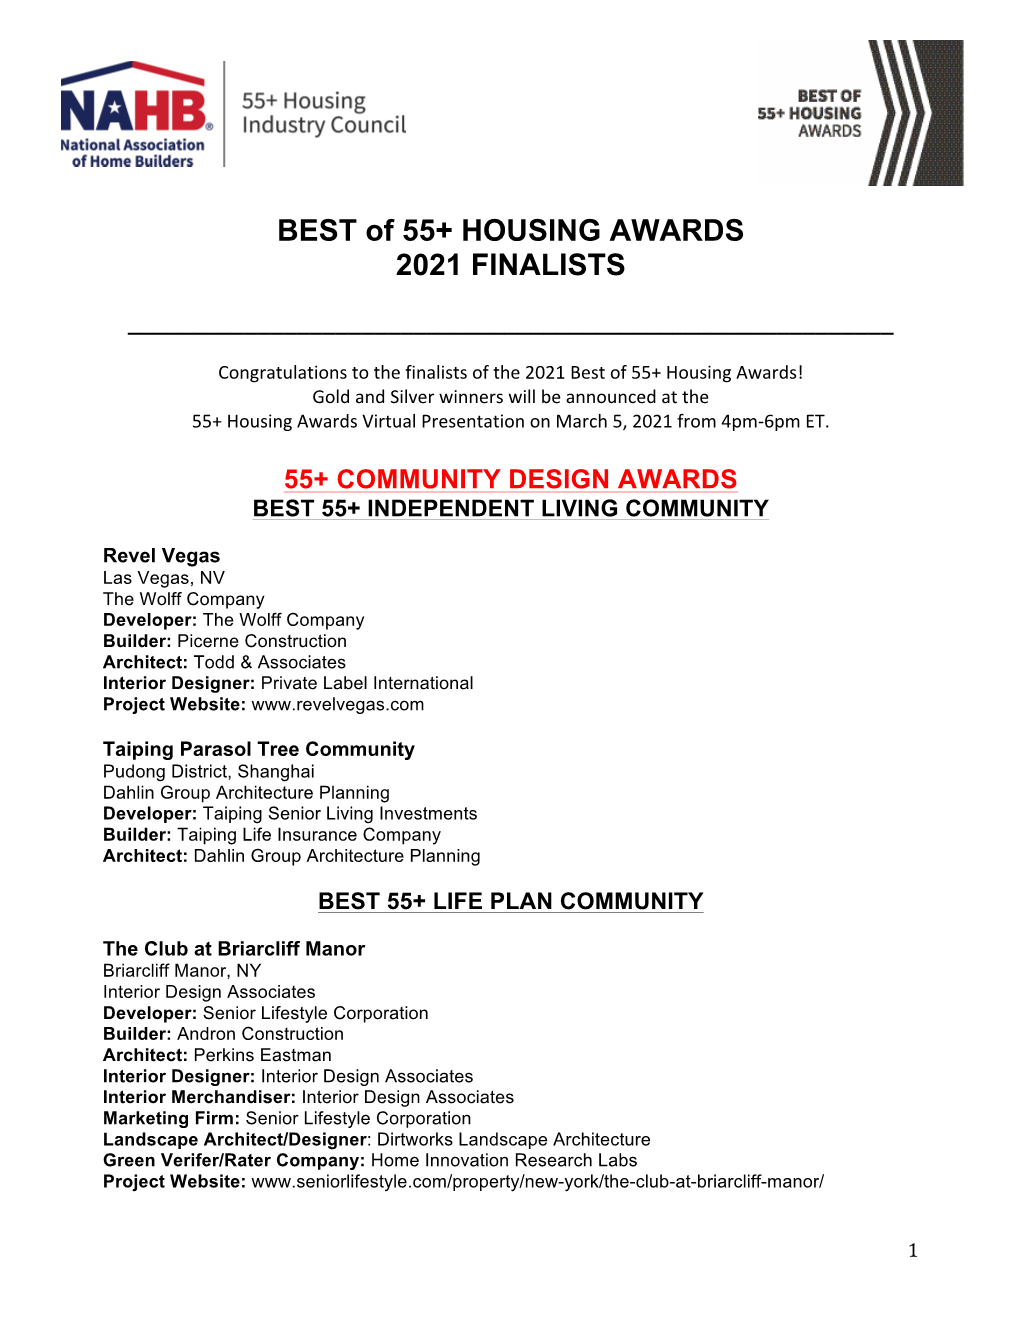 2021 Best of 55+ Housing Awards Finalists